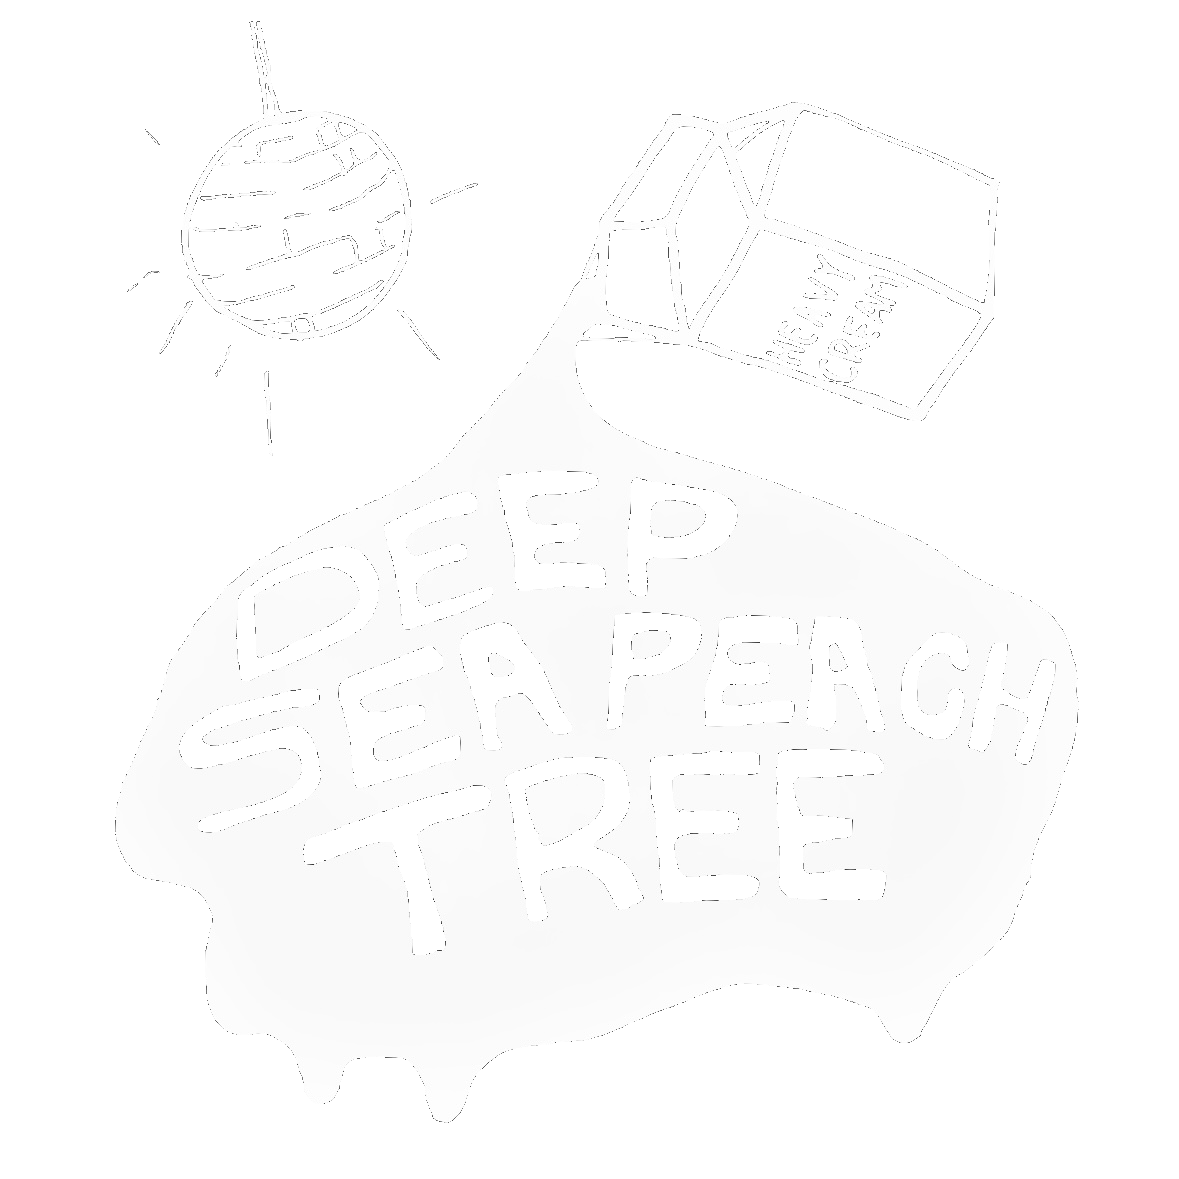 Deep Sea Peach Tree